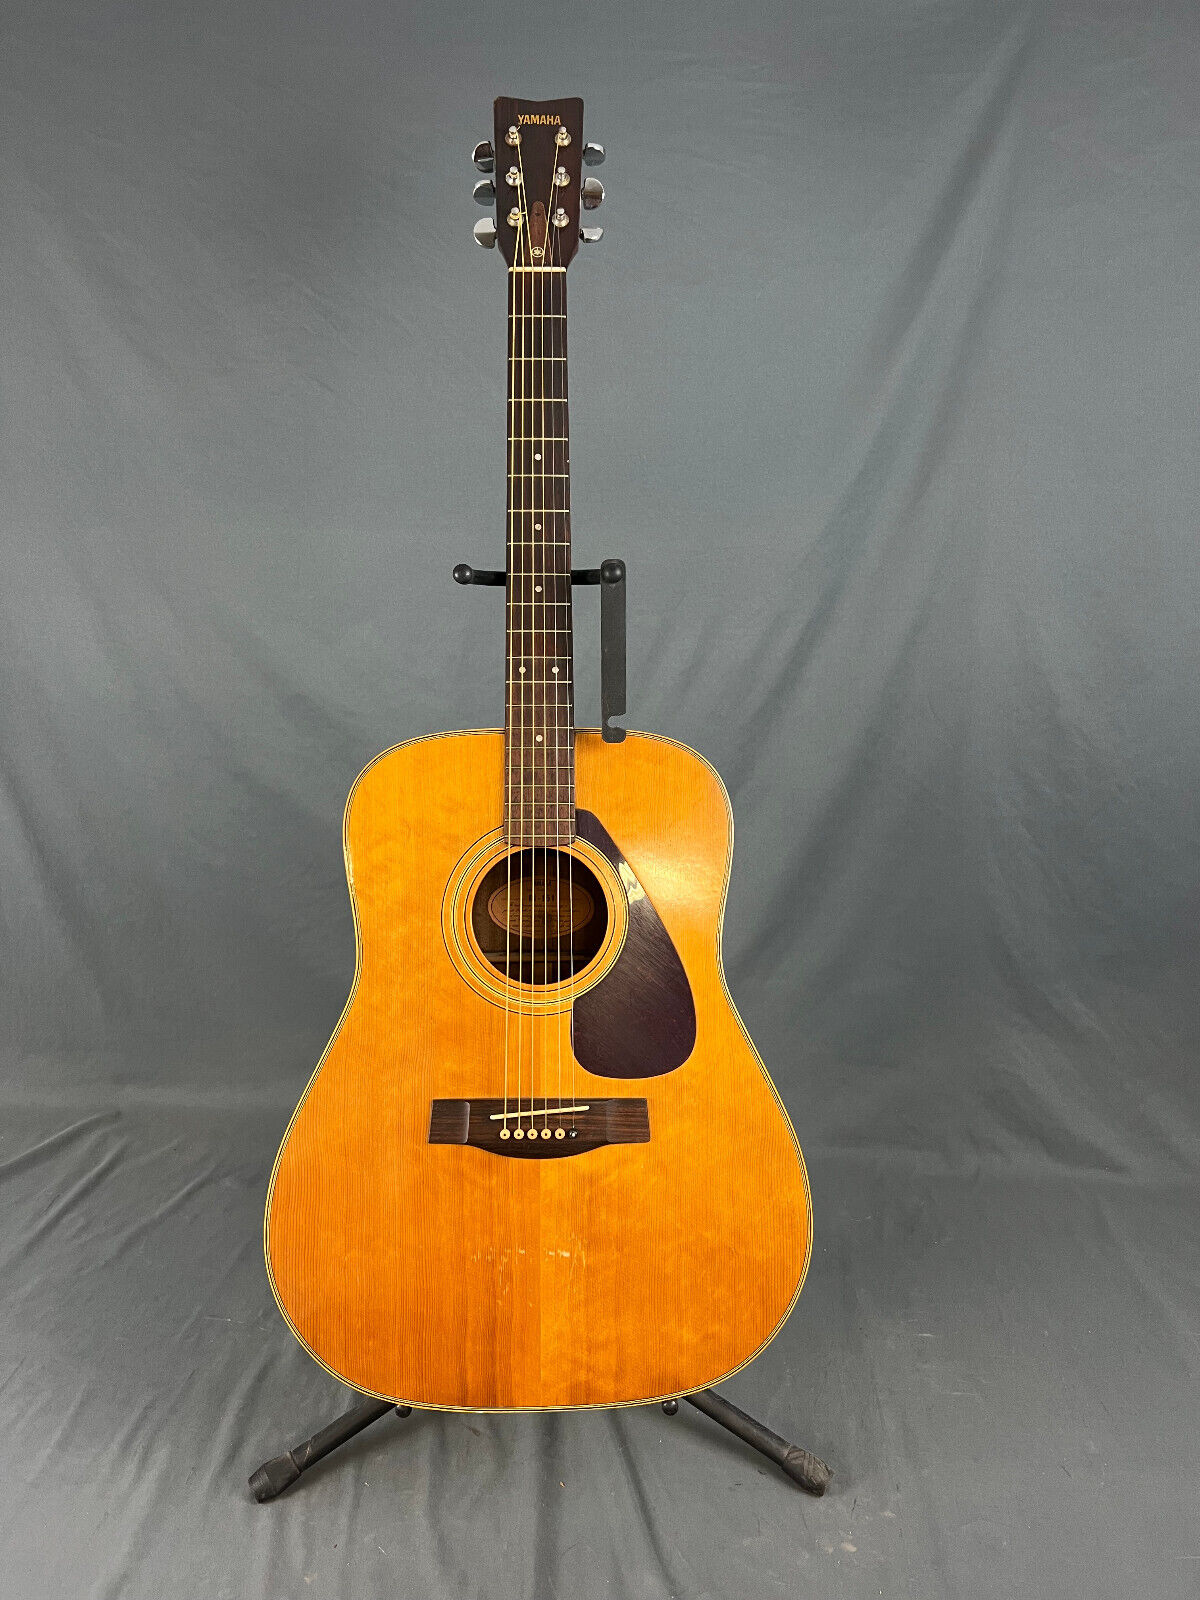 Yamaha FG-151 Acoustic Guitar, Orange label, Made in Japan, 1978